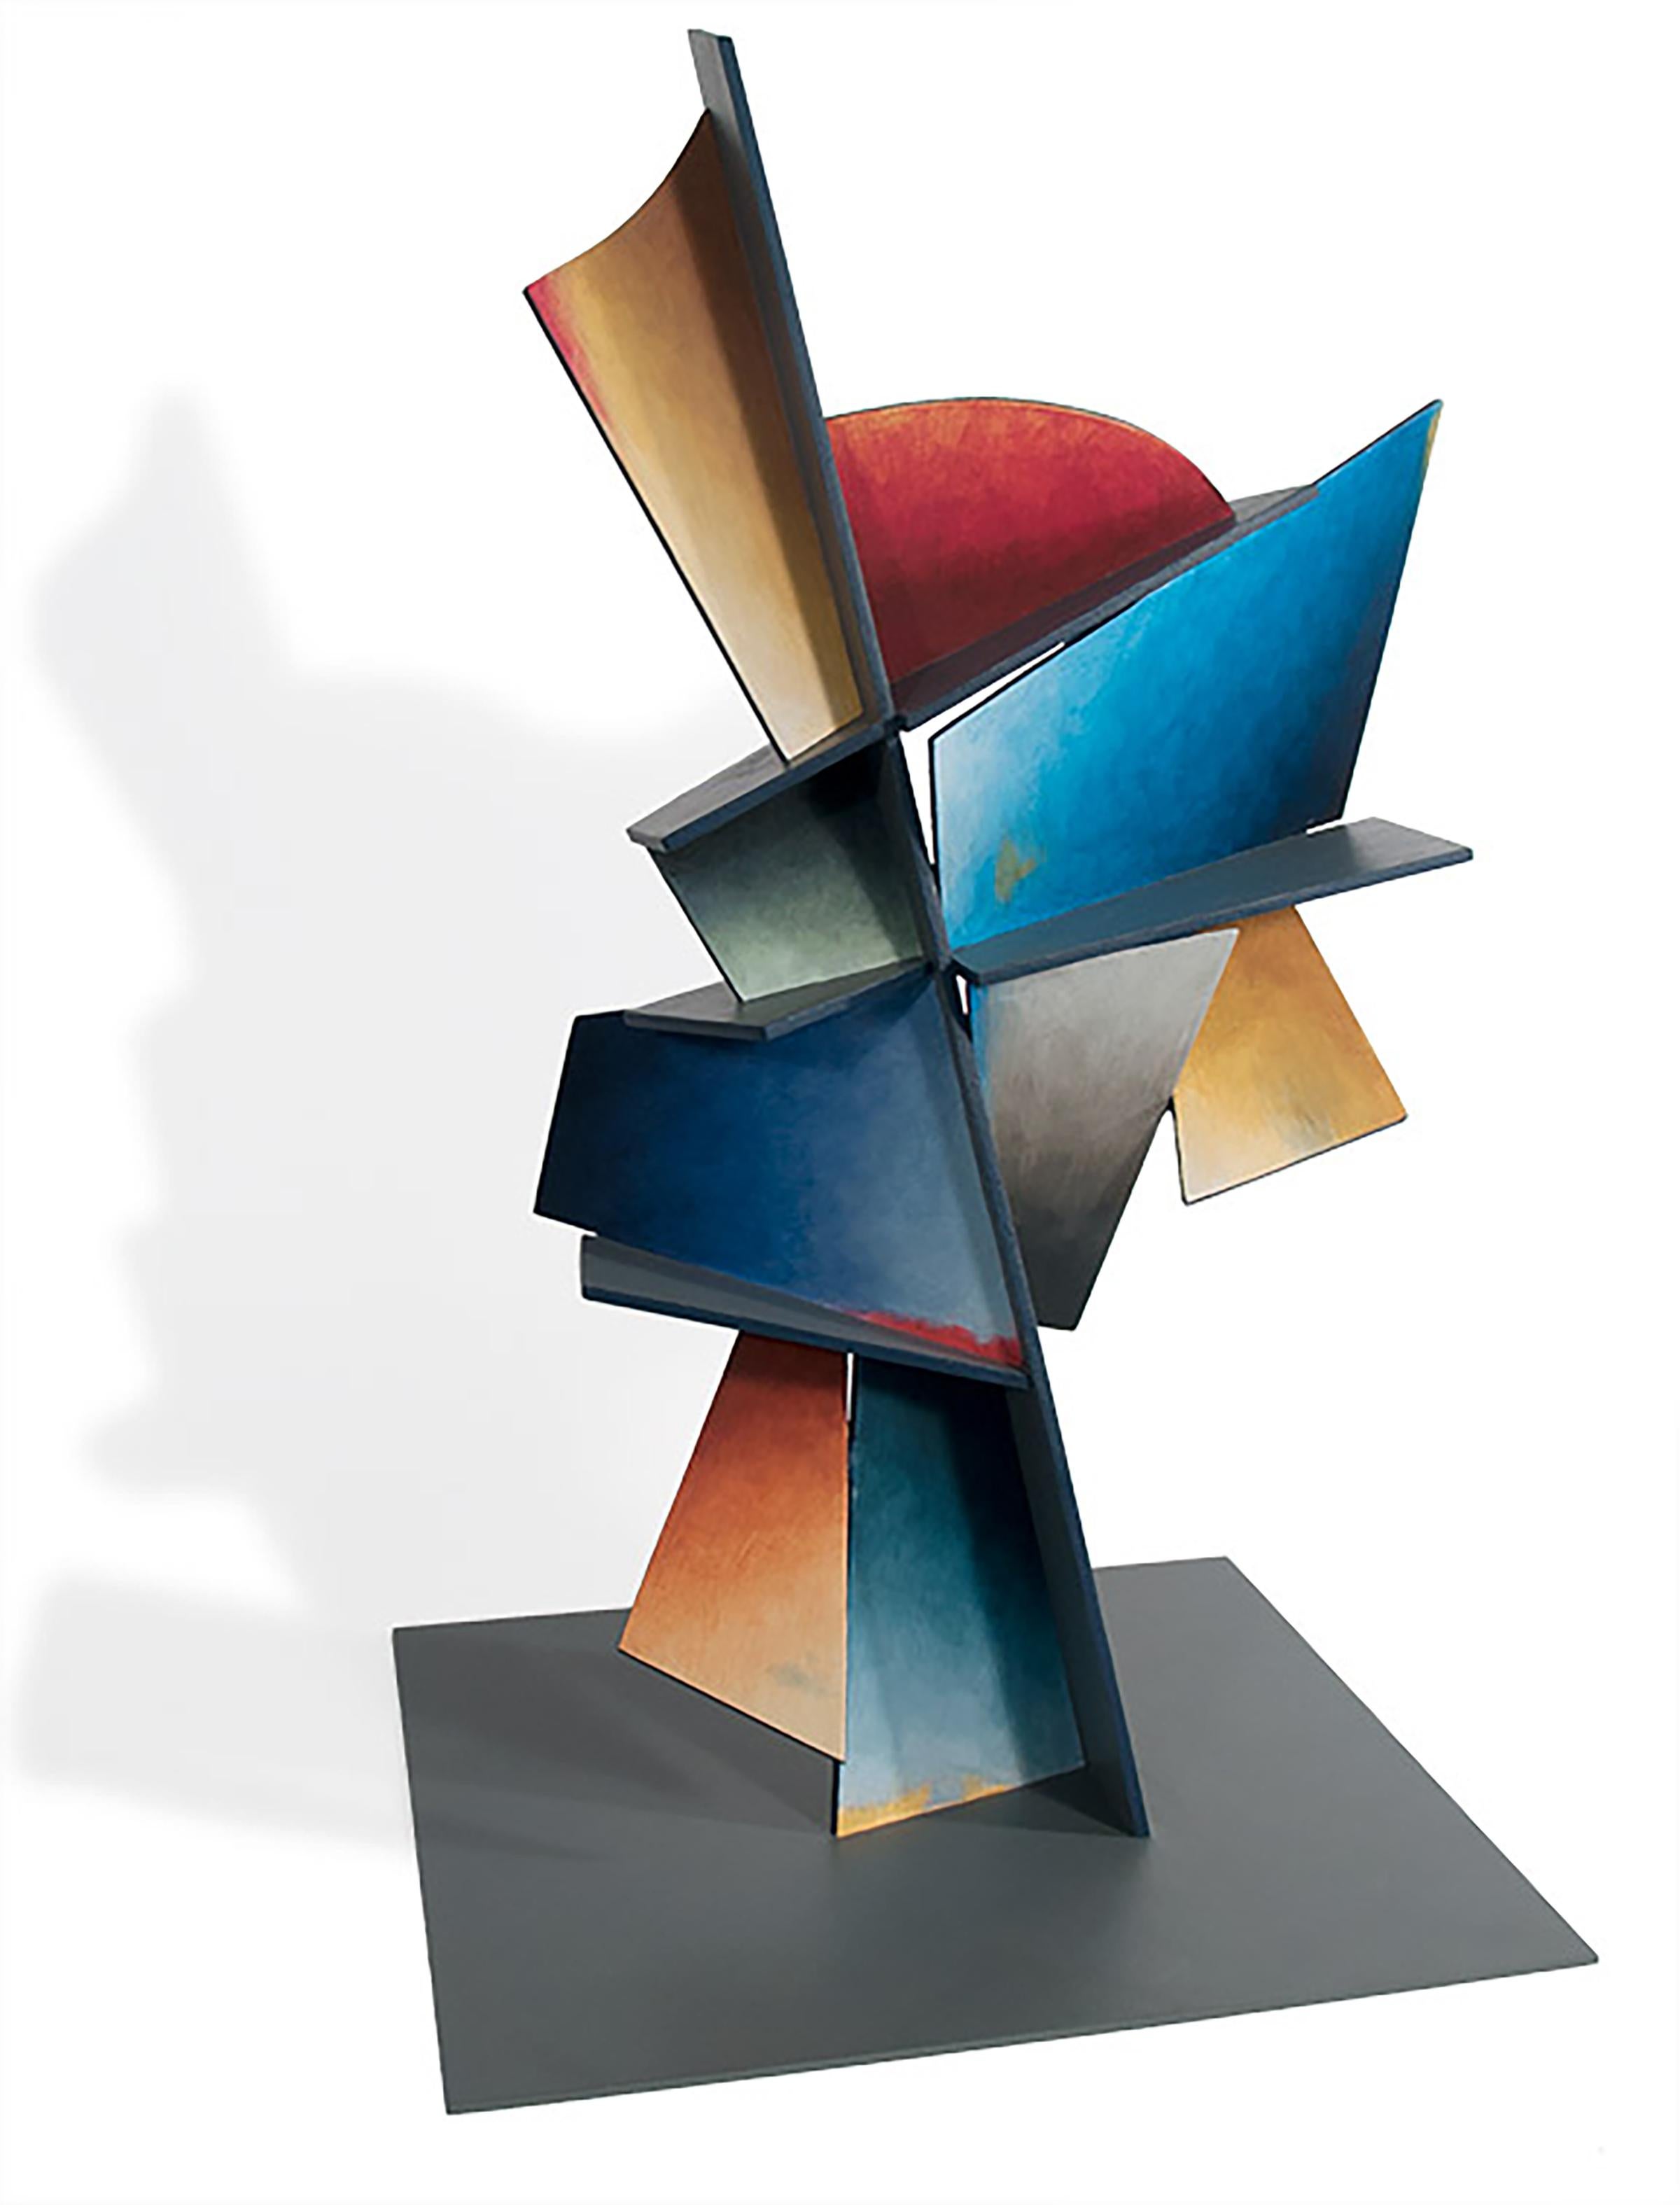 Hidden Hour - Handbemalte Skulptur aus geschweißtem Stahl in abstrakter geometrischer Form – Mixed Media Art von Chris Hill